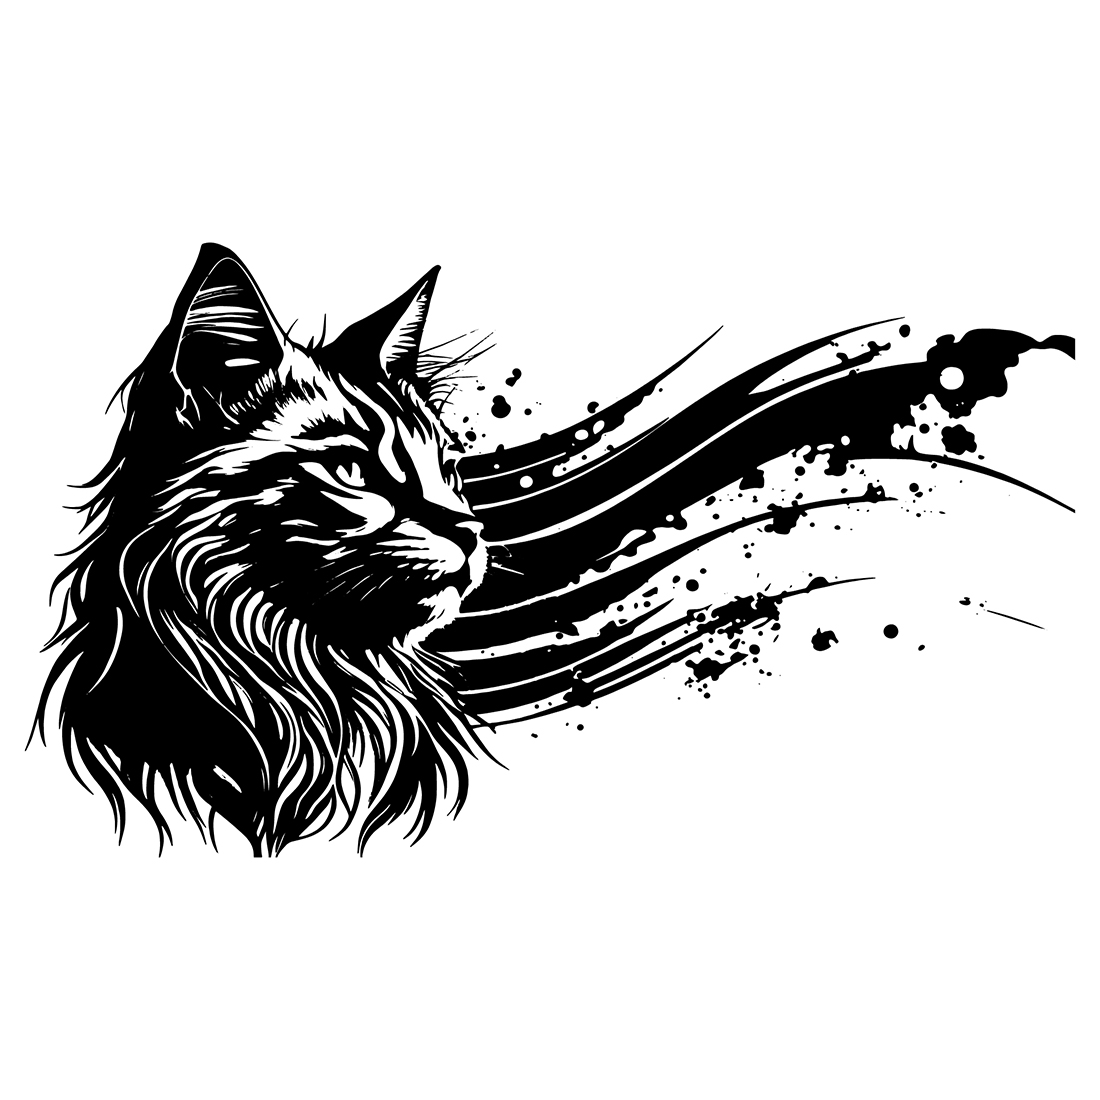 Beautiful Cat Logo Illustration cover image.